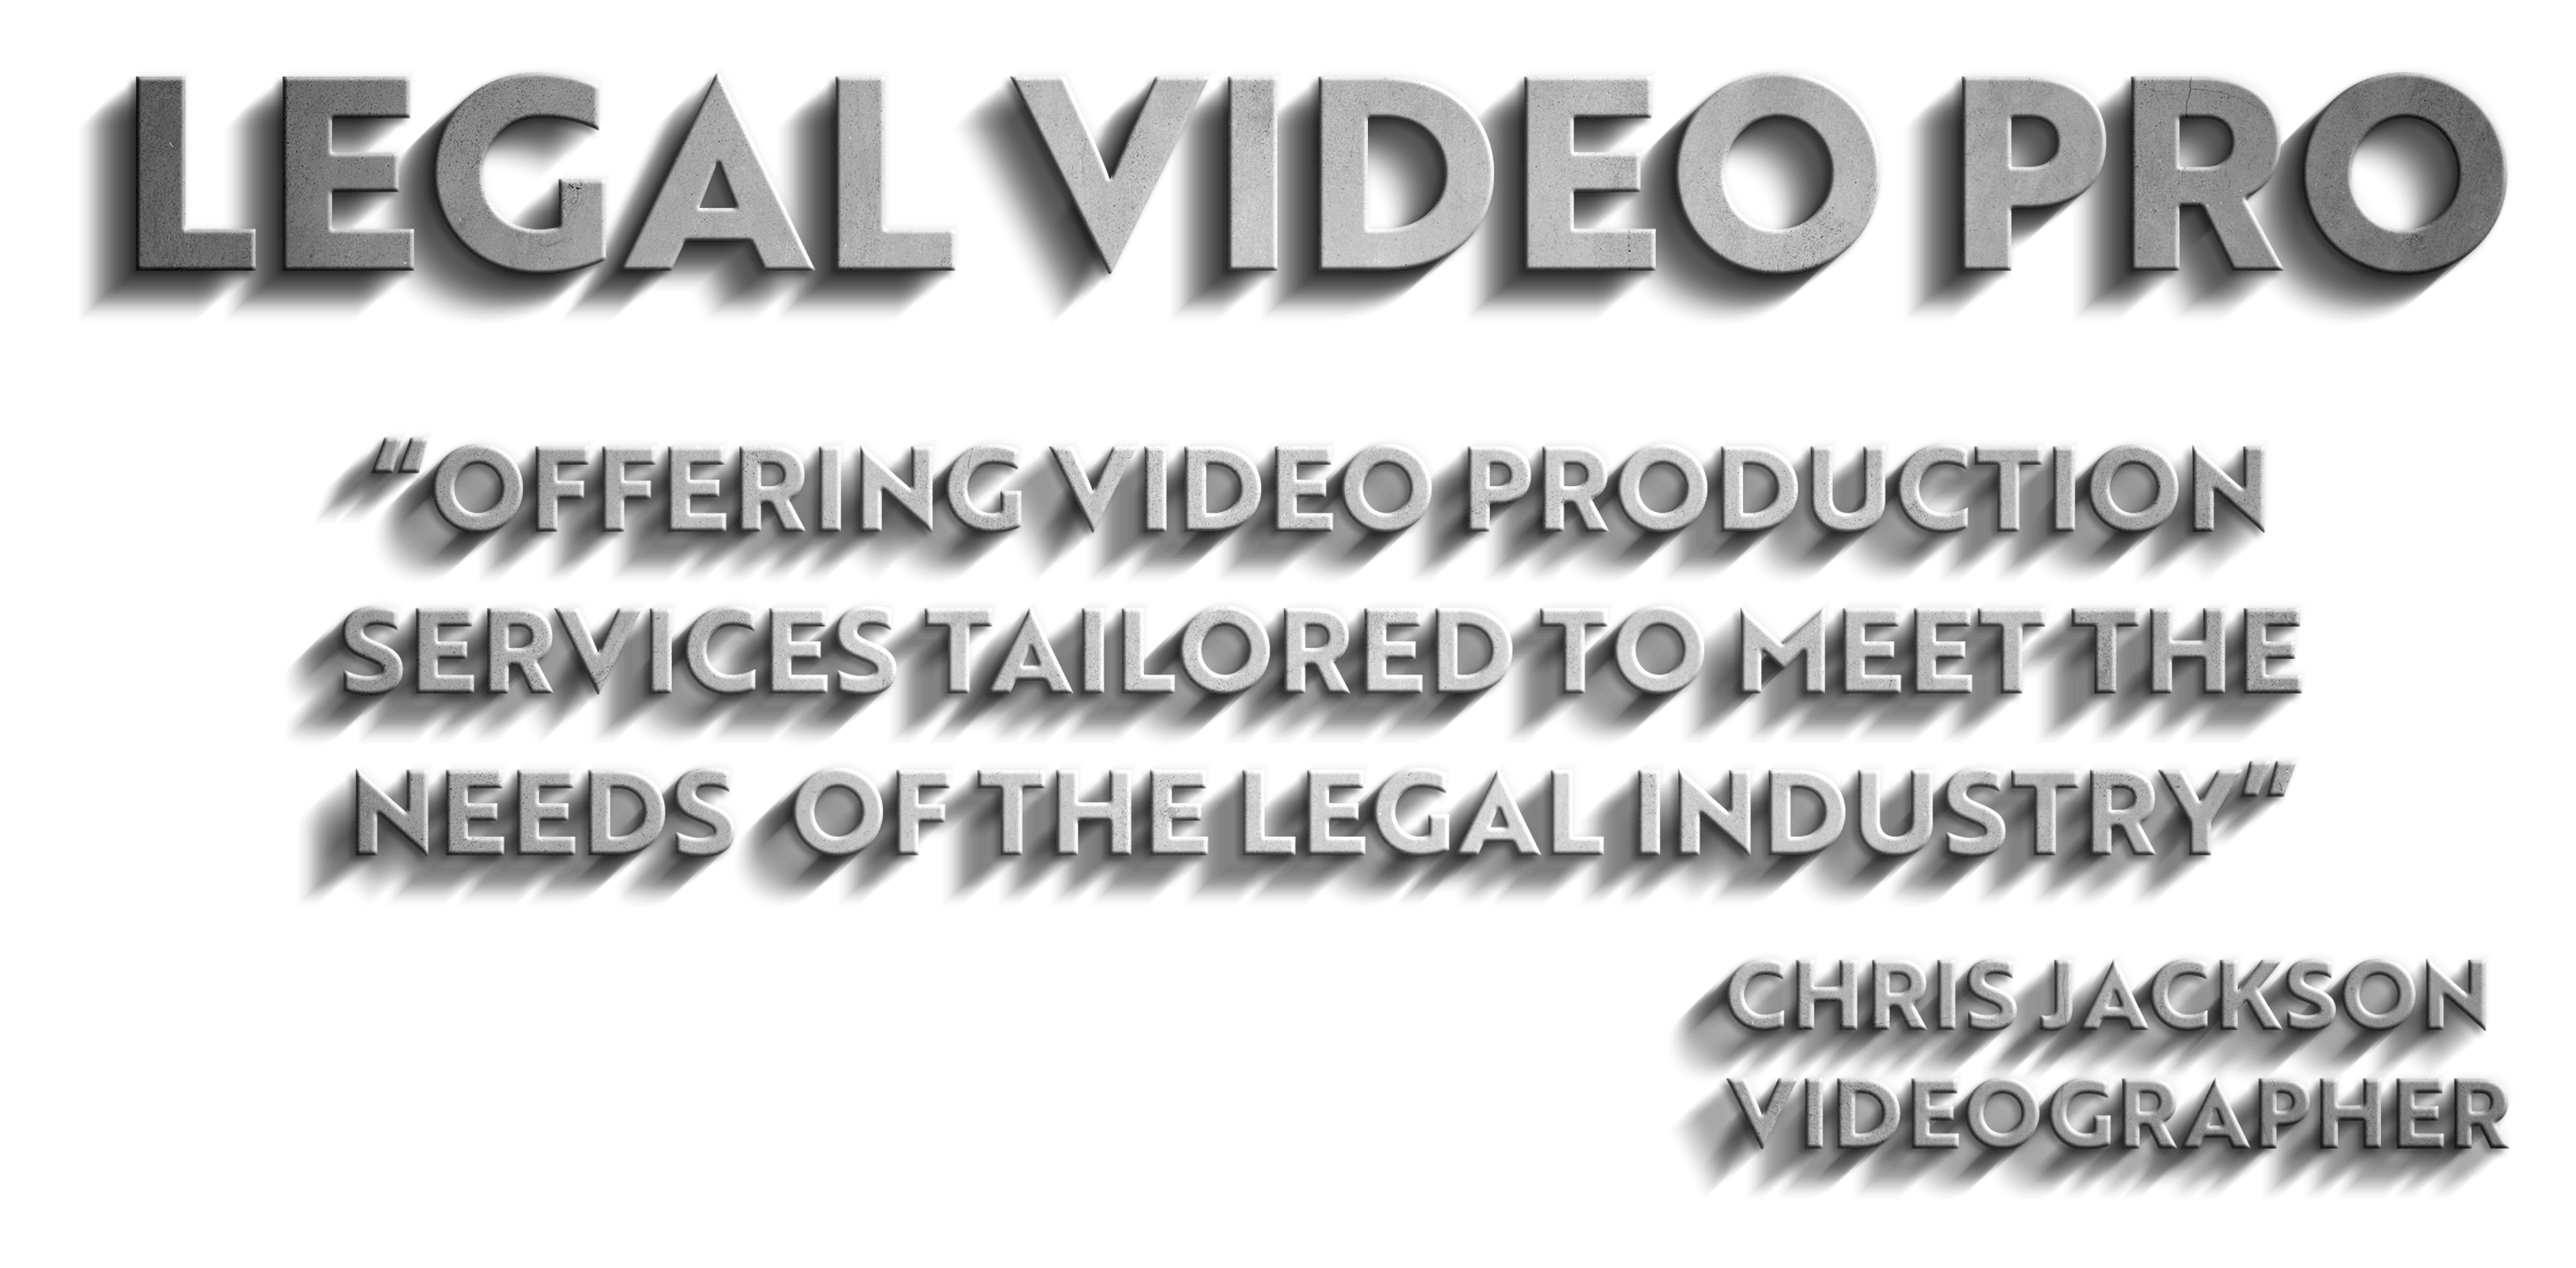 Legal Video Pro